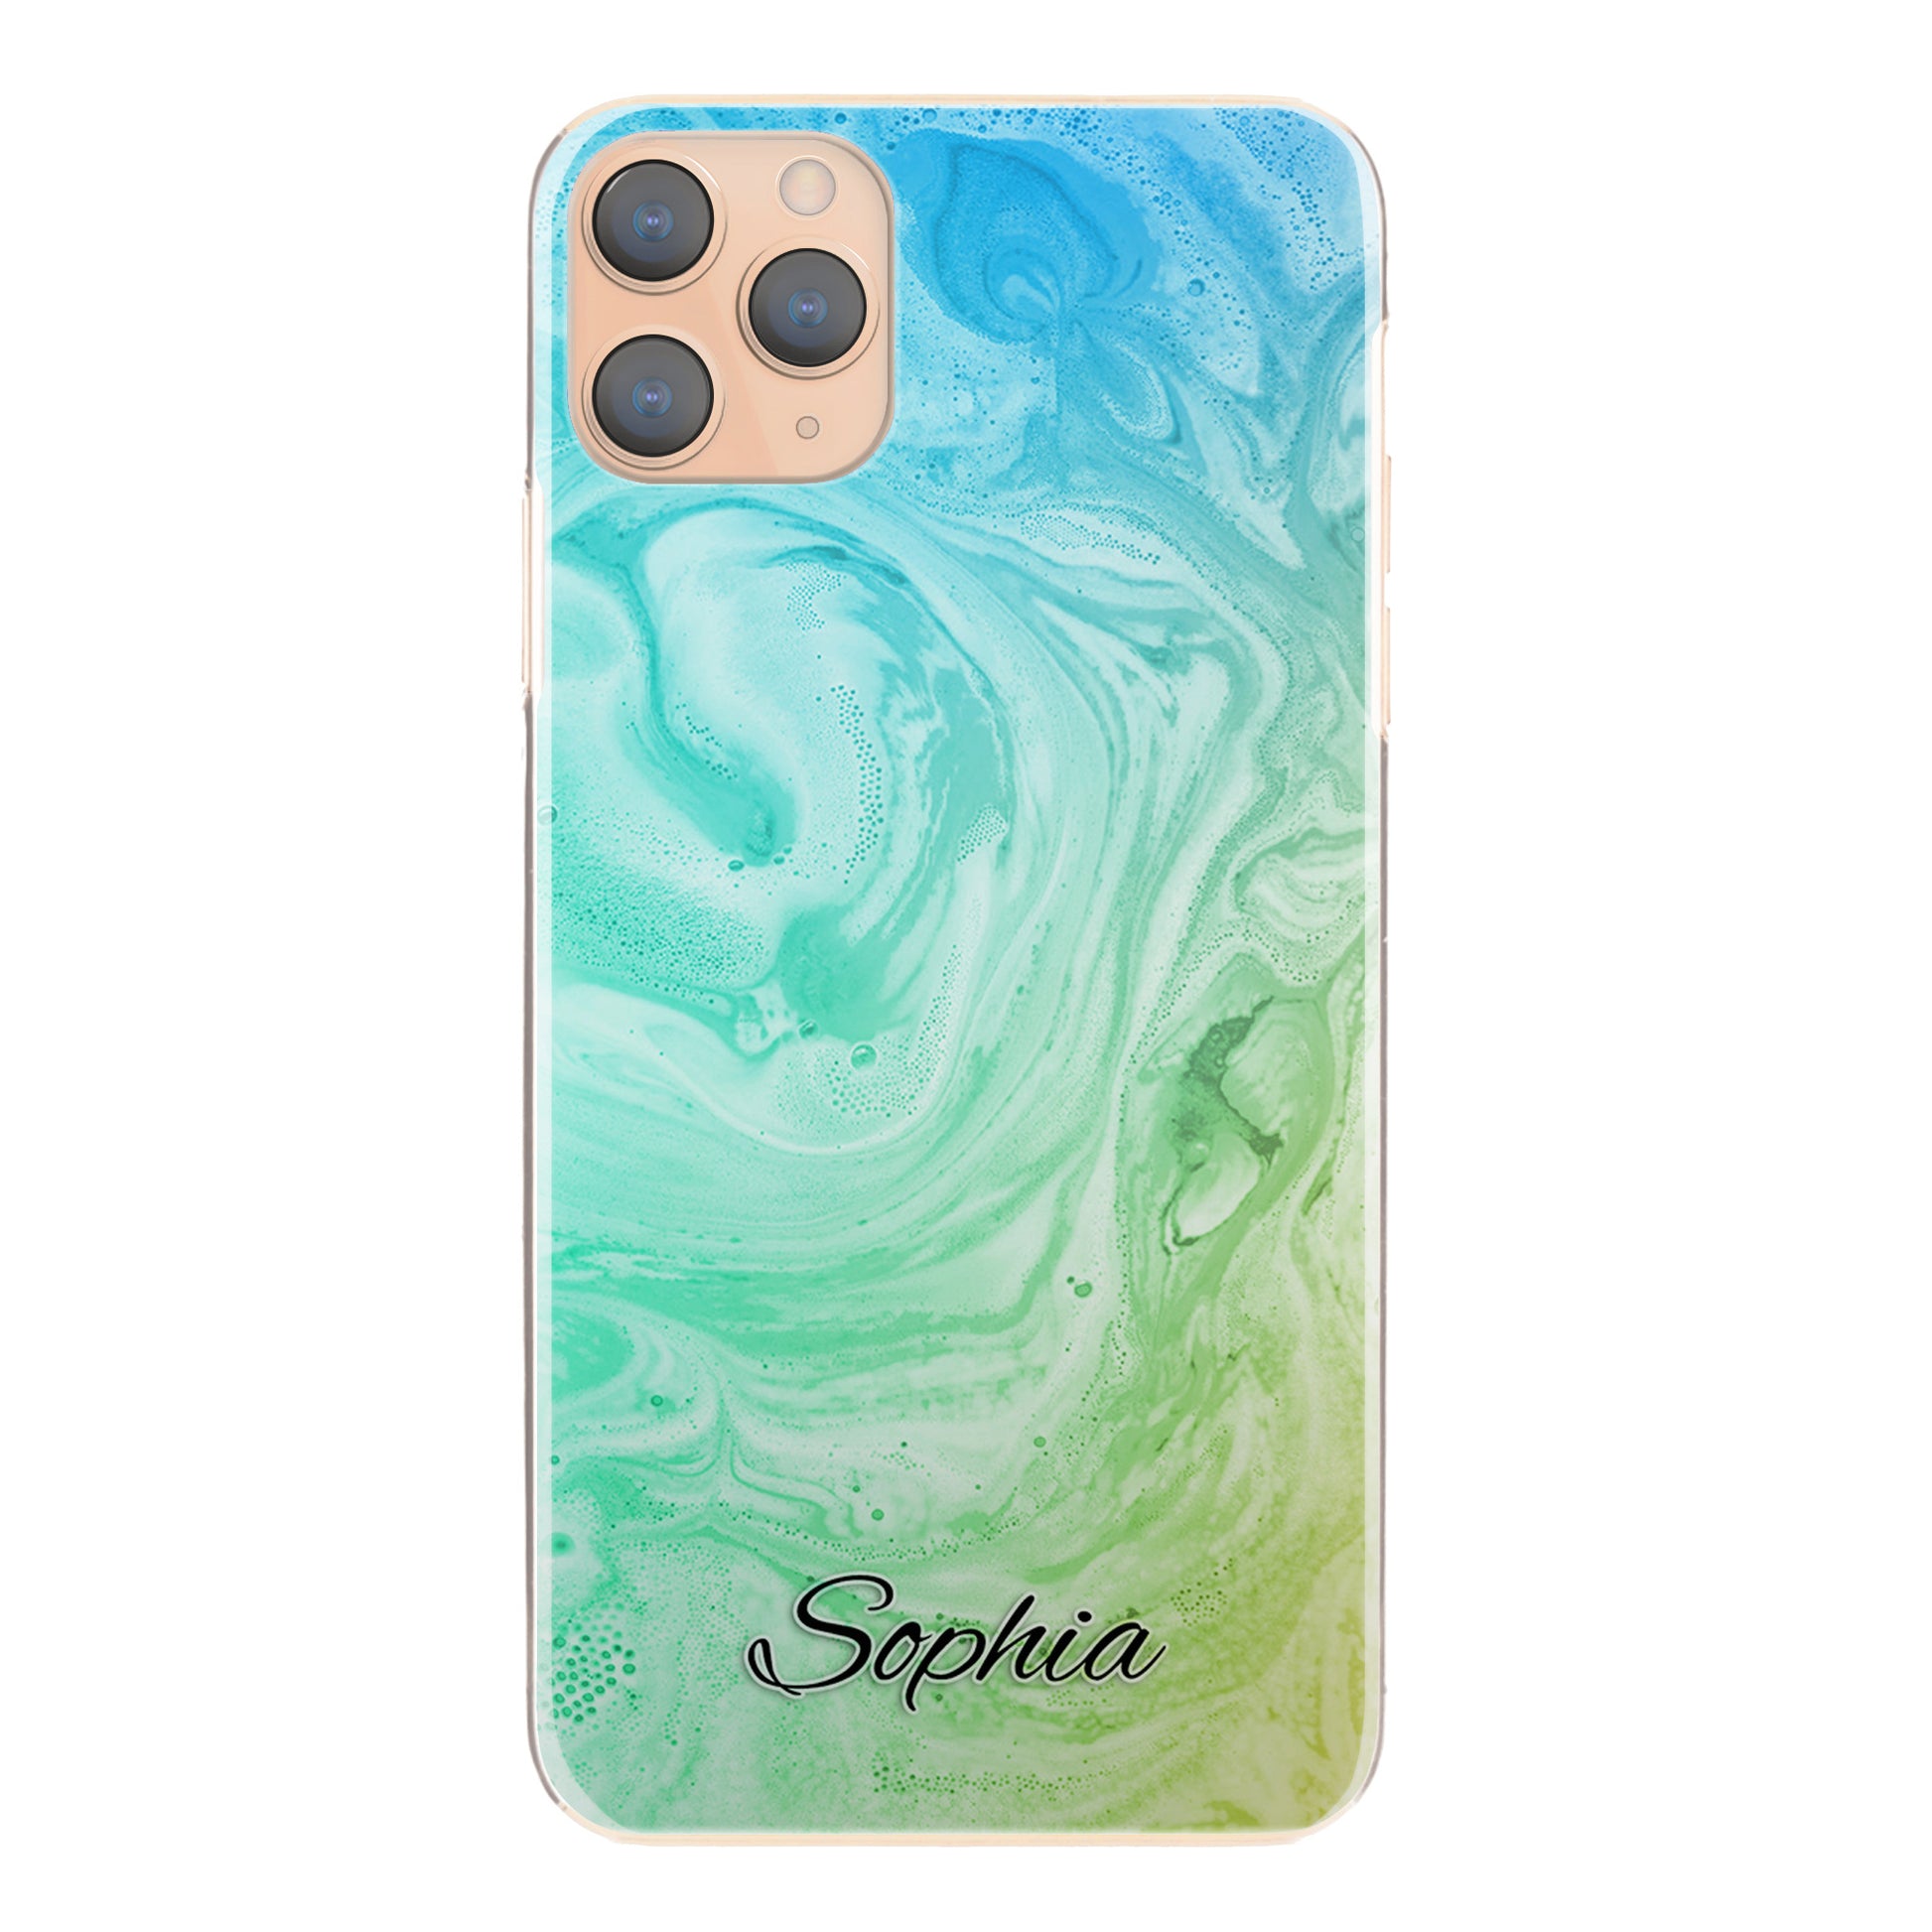 Personalised Nokia Phone Hard Case with Stylish Text on Turquoise Gradient Swirled Marble